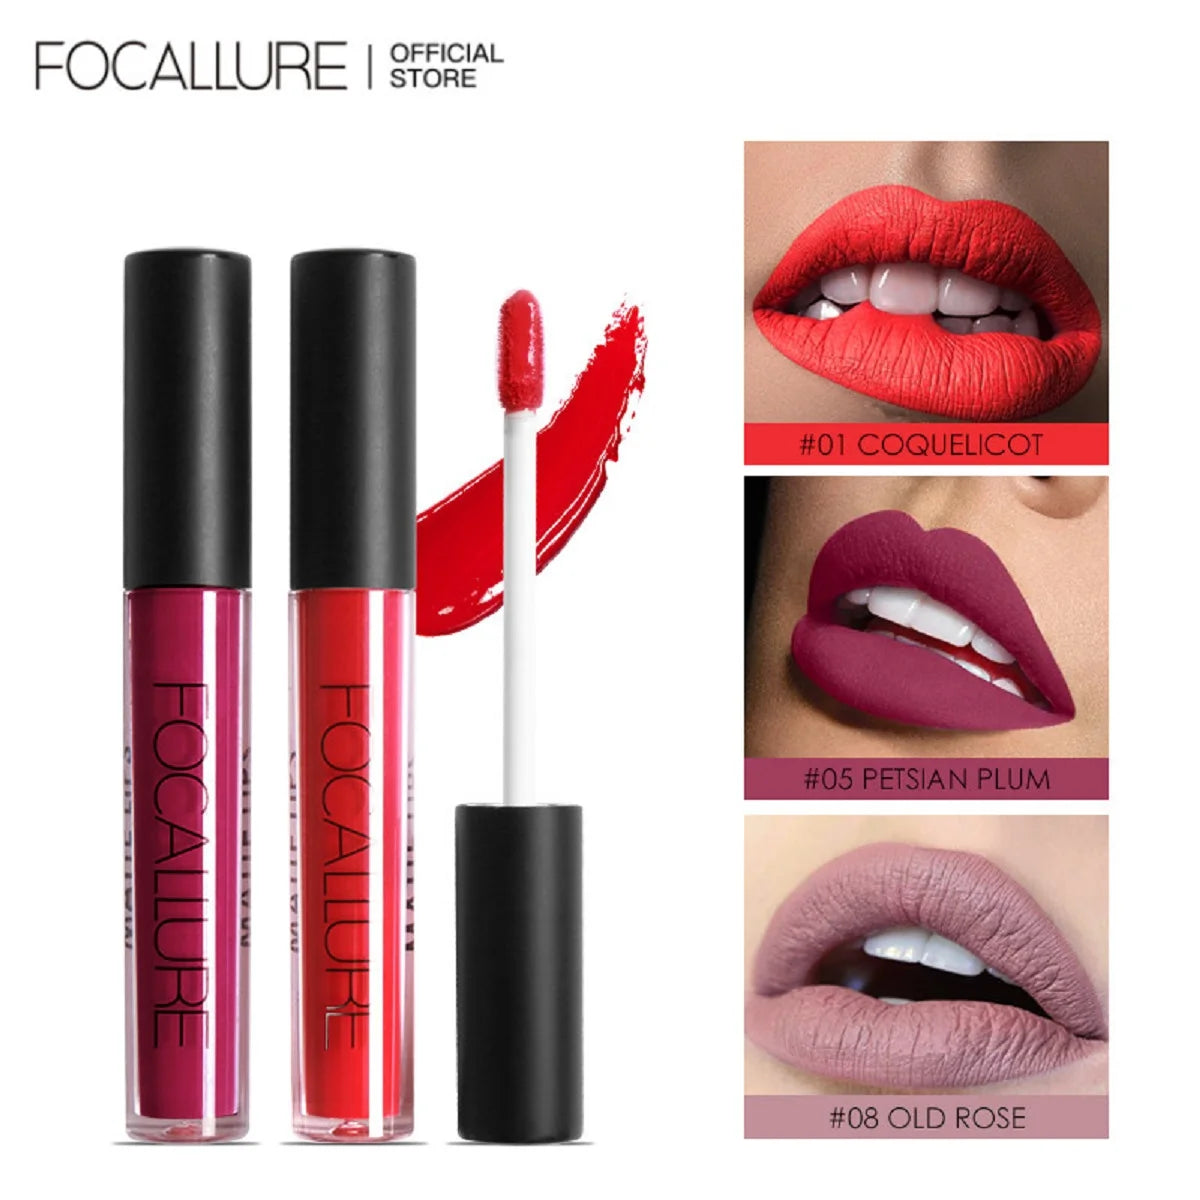 Focallure Waterproof Long-lasting Ultra Matte Liquid Lipstick